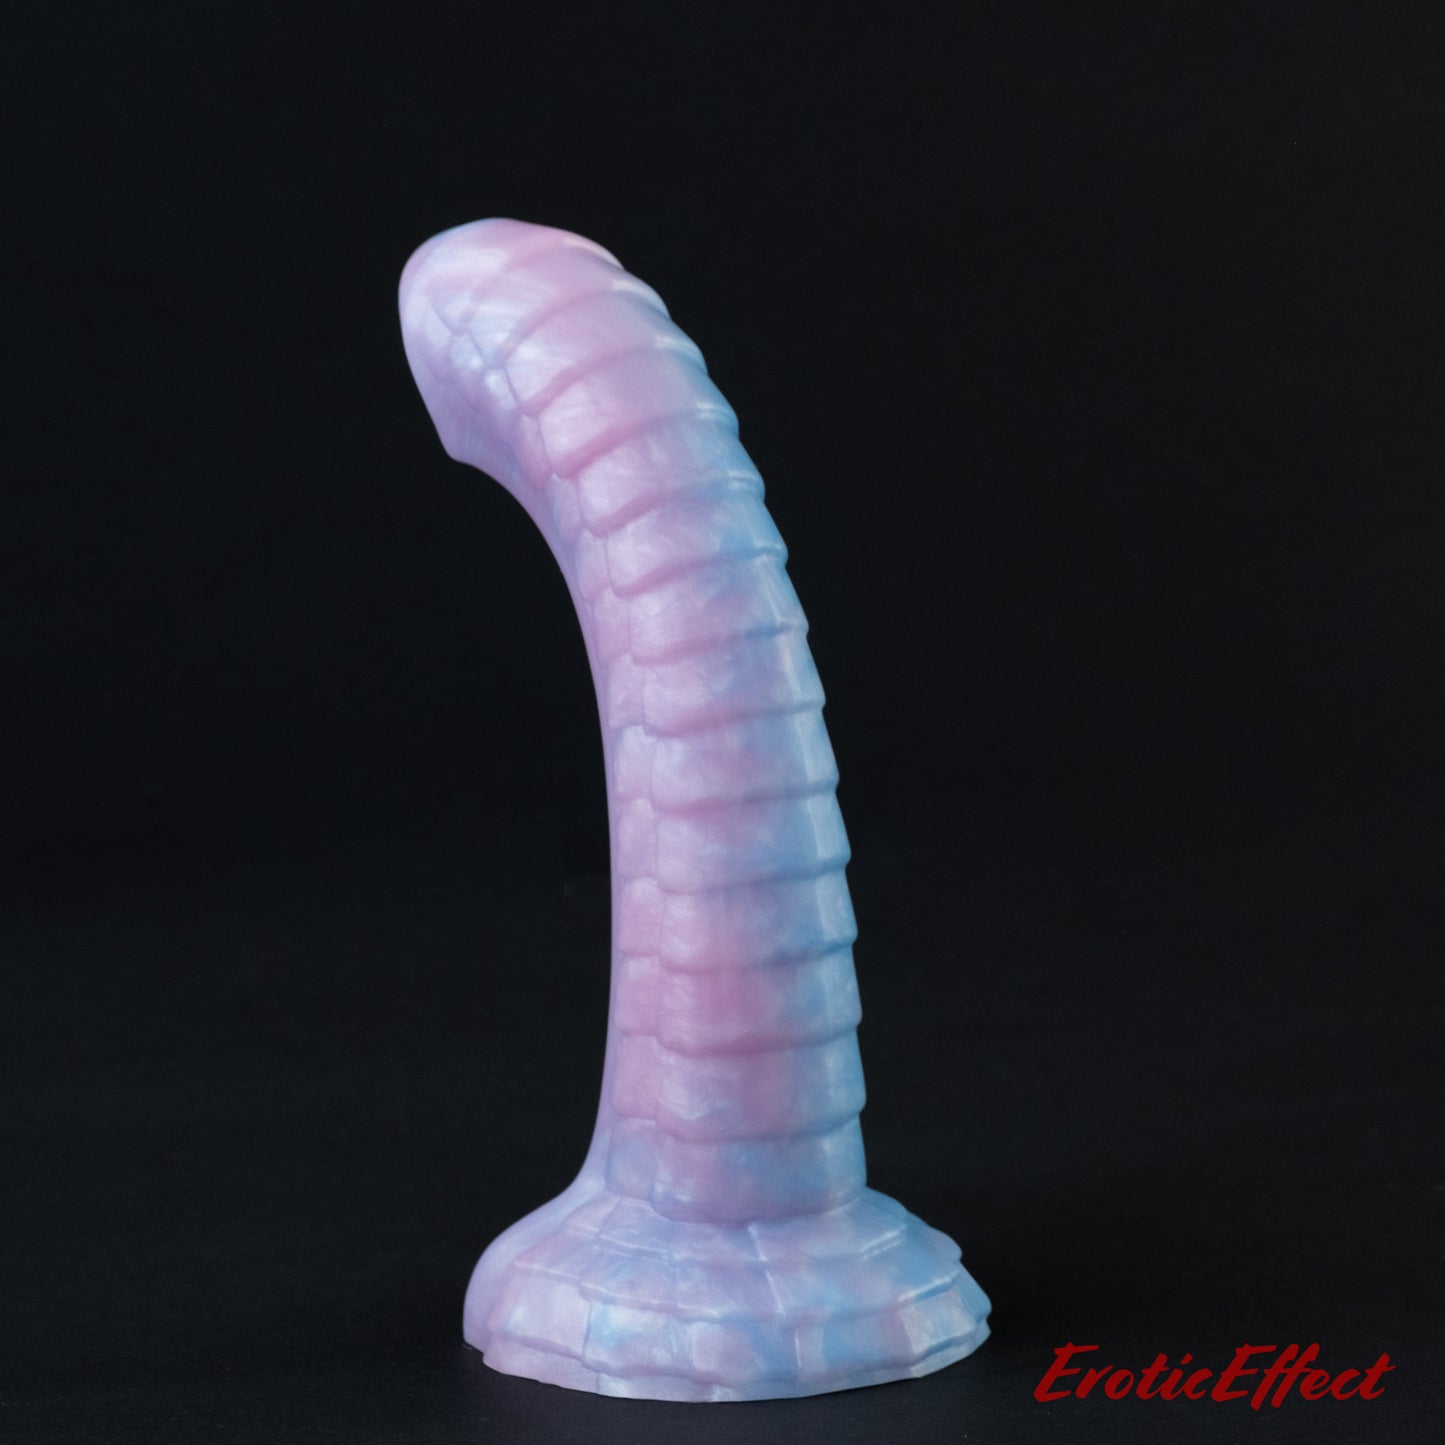 Raithor Dragon Fantasy Silicone Dildo - Large - Medium Firmness - Pink/White/Blue Shimmer